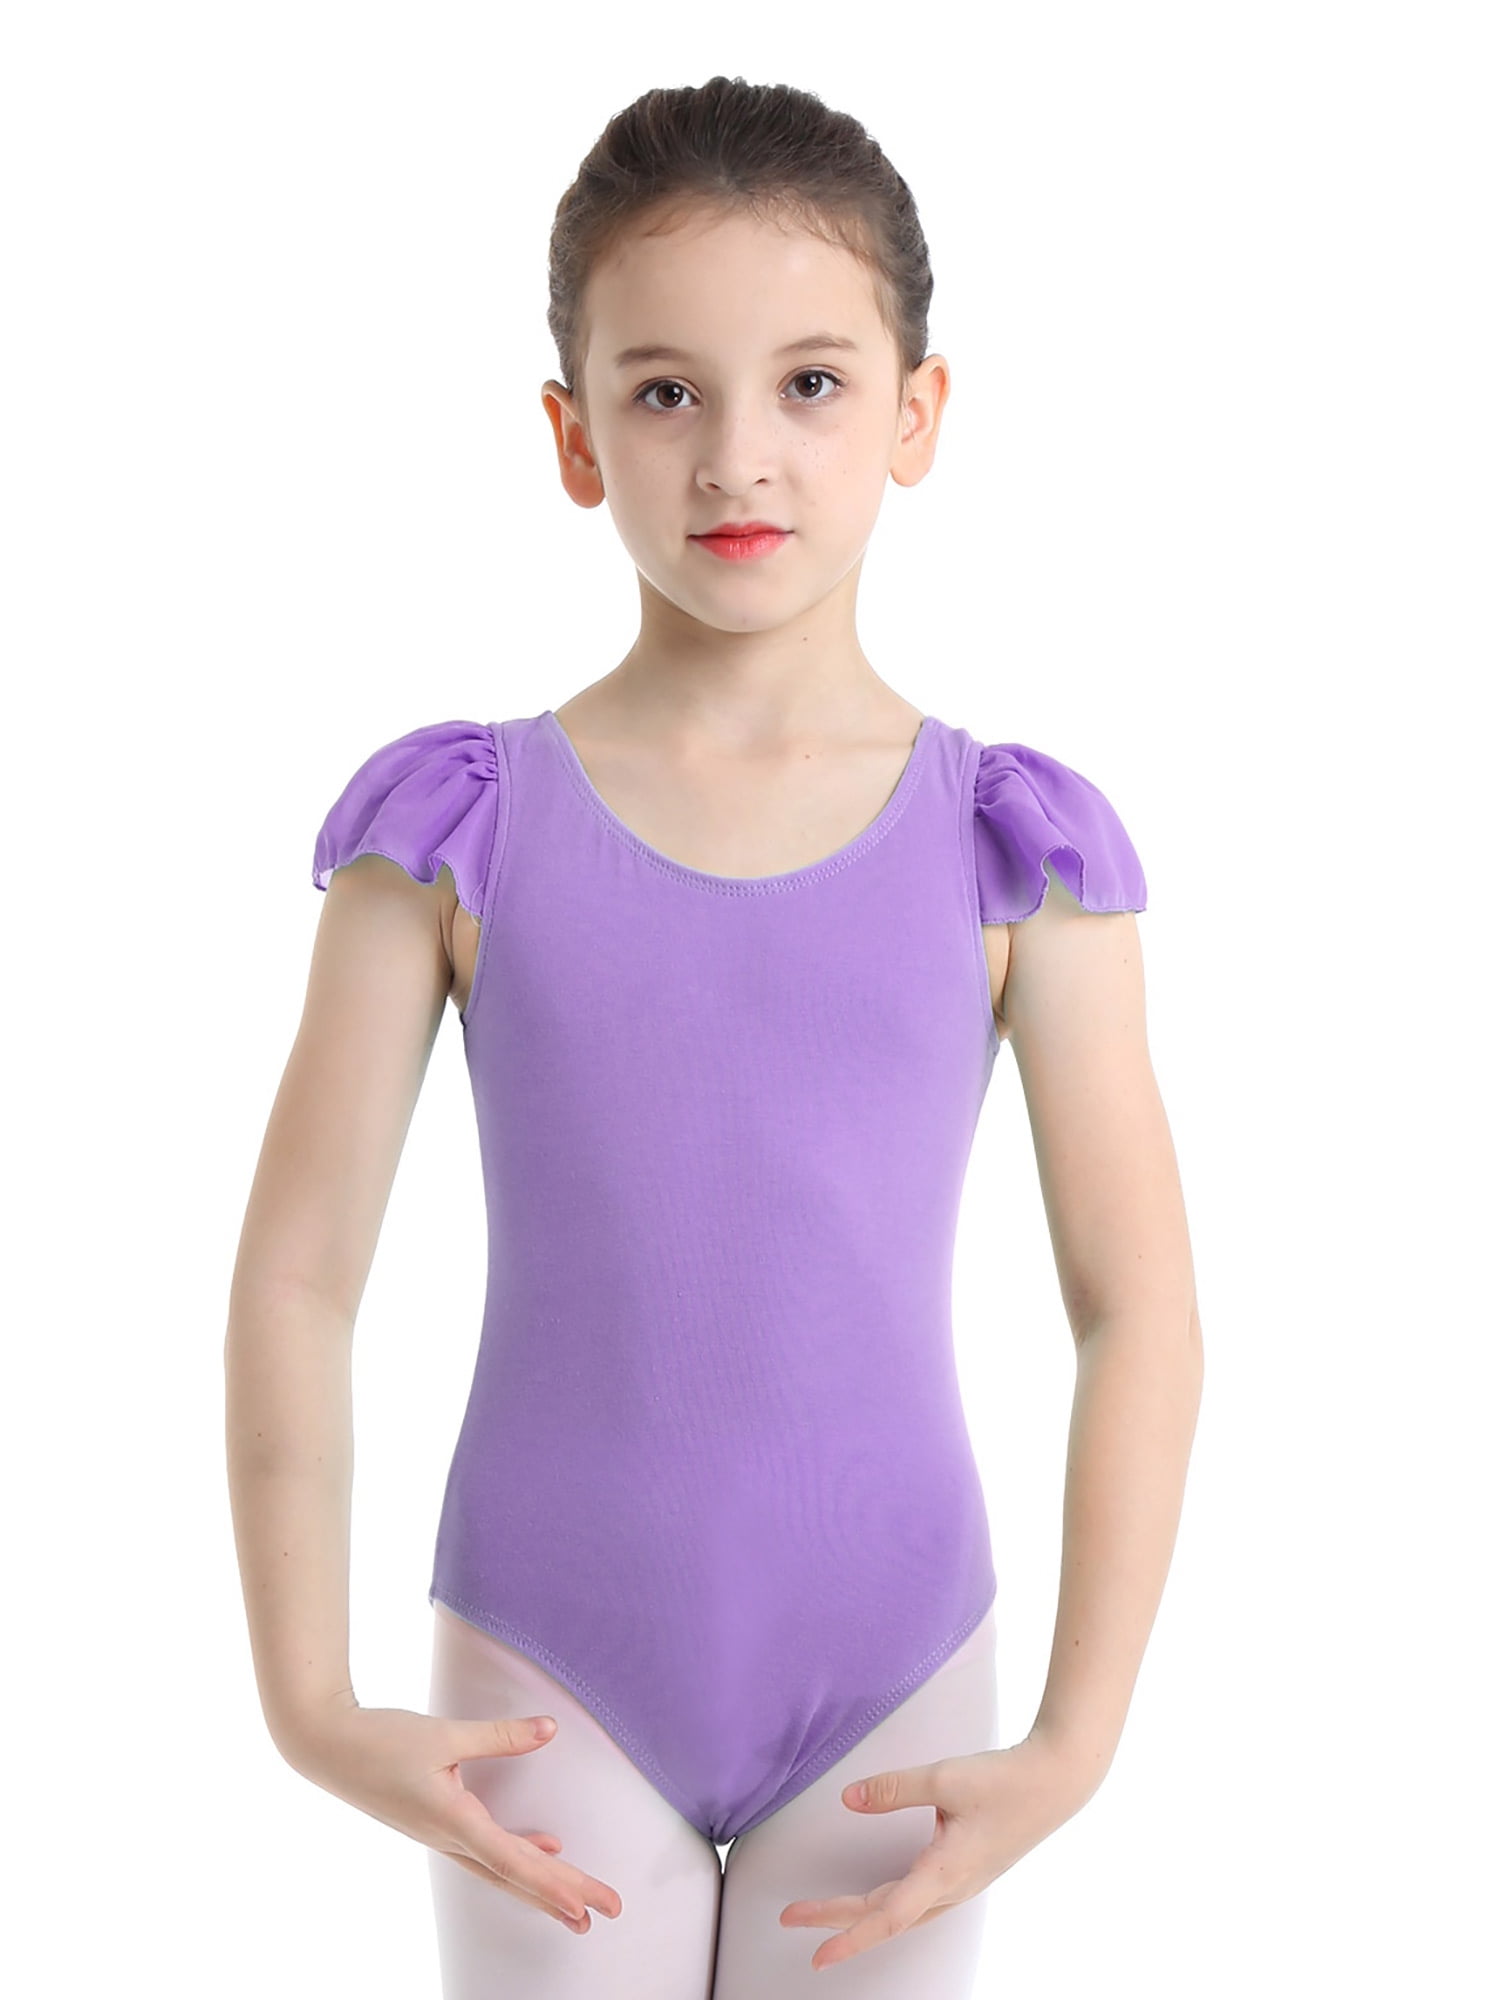 Iefiel Kids Girls Ruffle Short Sleeves Gymnastics Ballet Leotard